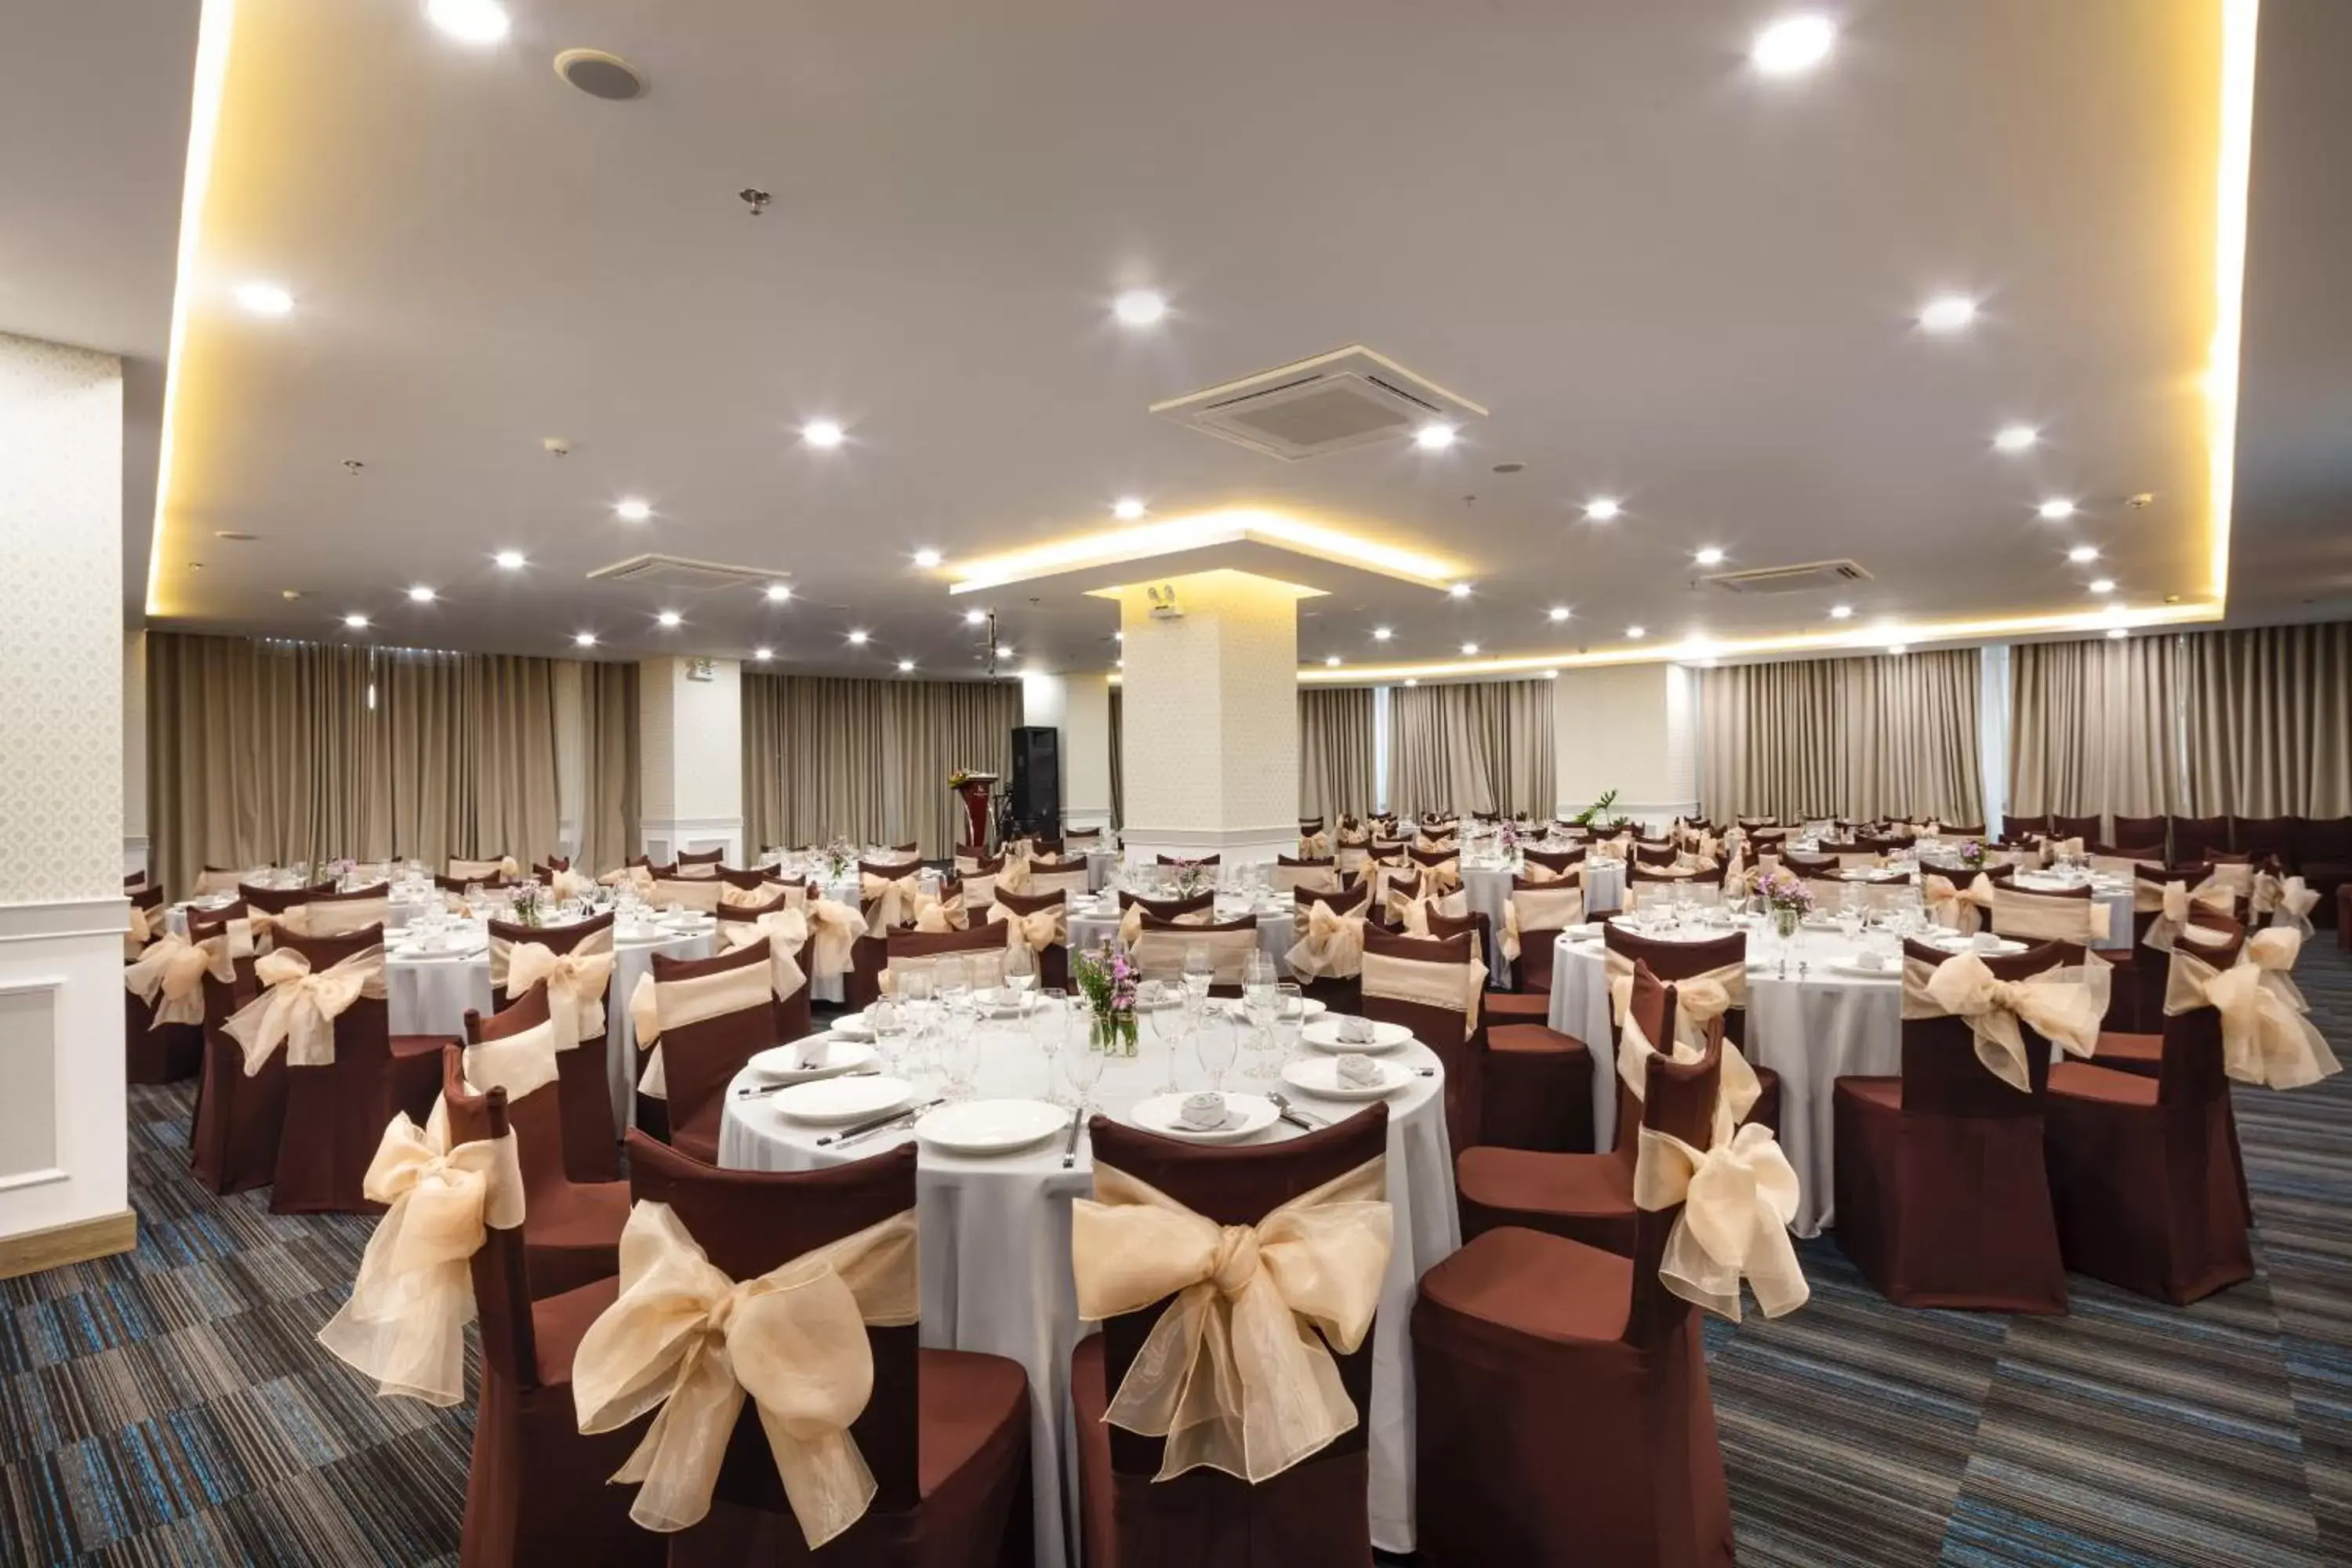 Meeting/conference room, Banquet Facilities in Florida Nha Trang Hotel